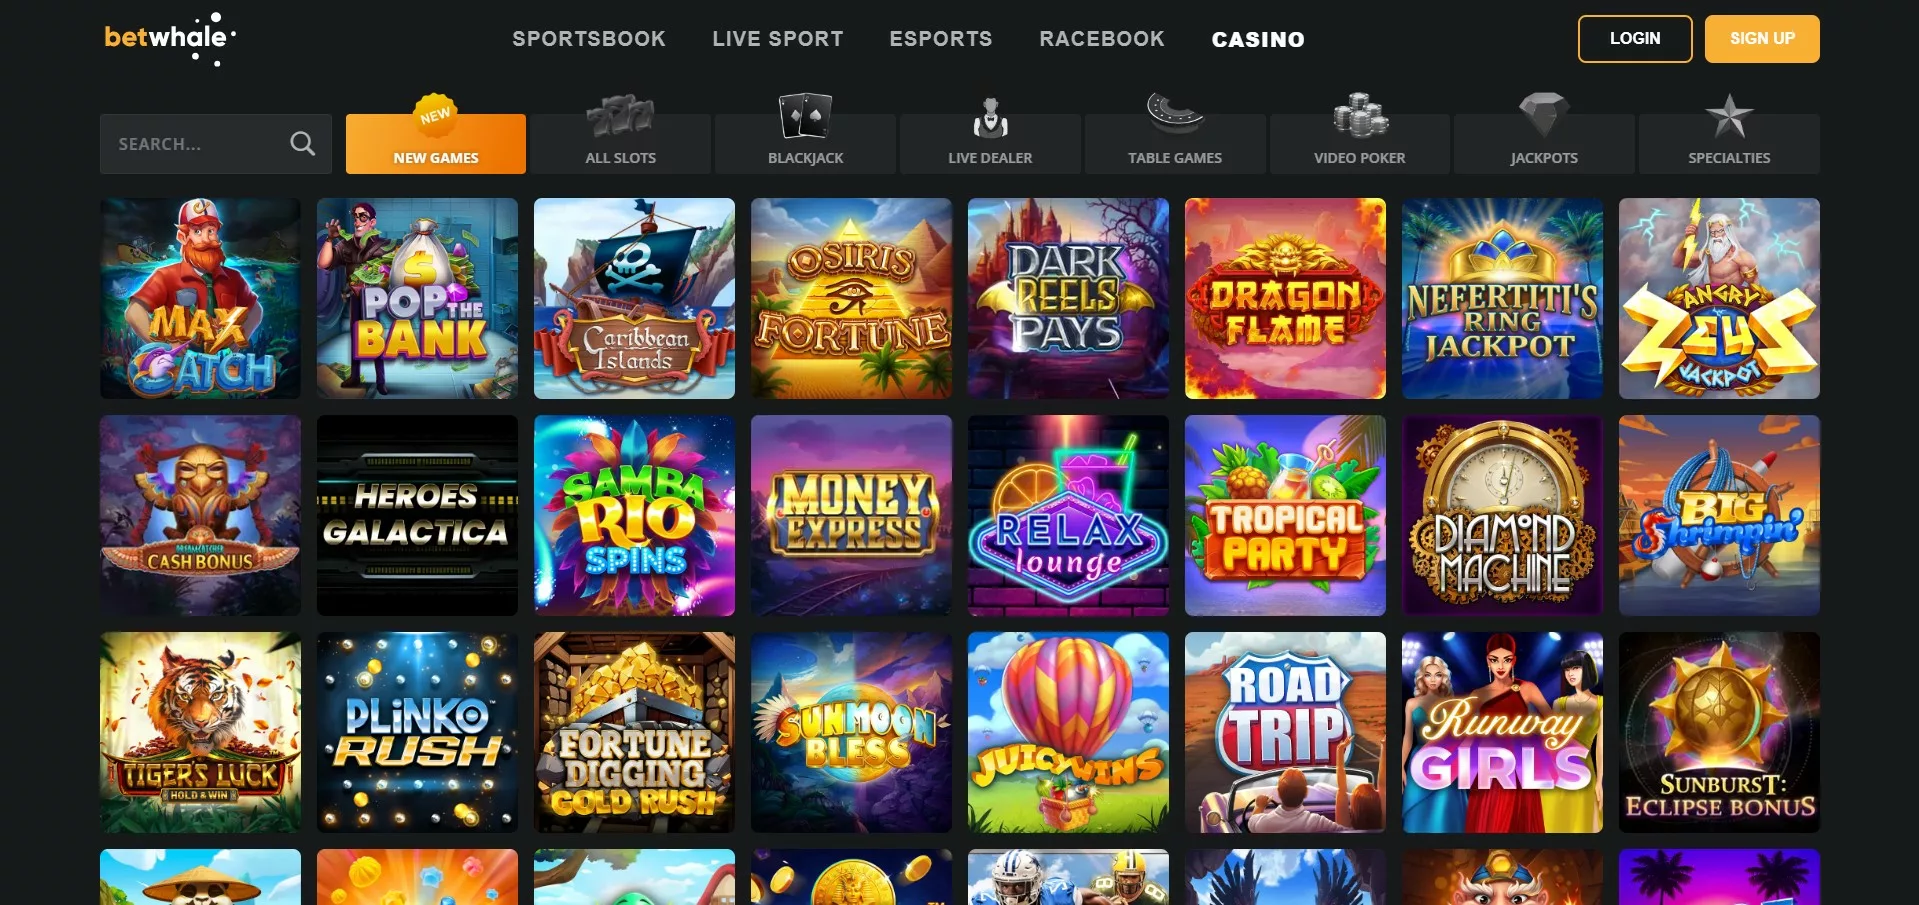 Betwhale Casino Bonus: 250% + 50 Free Spins